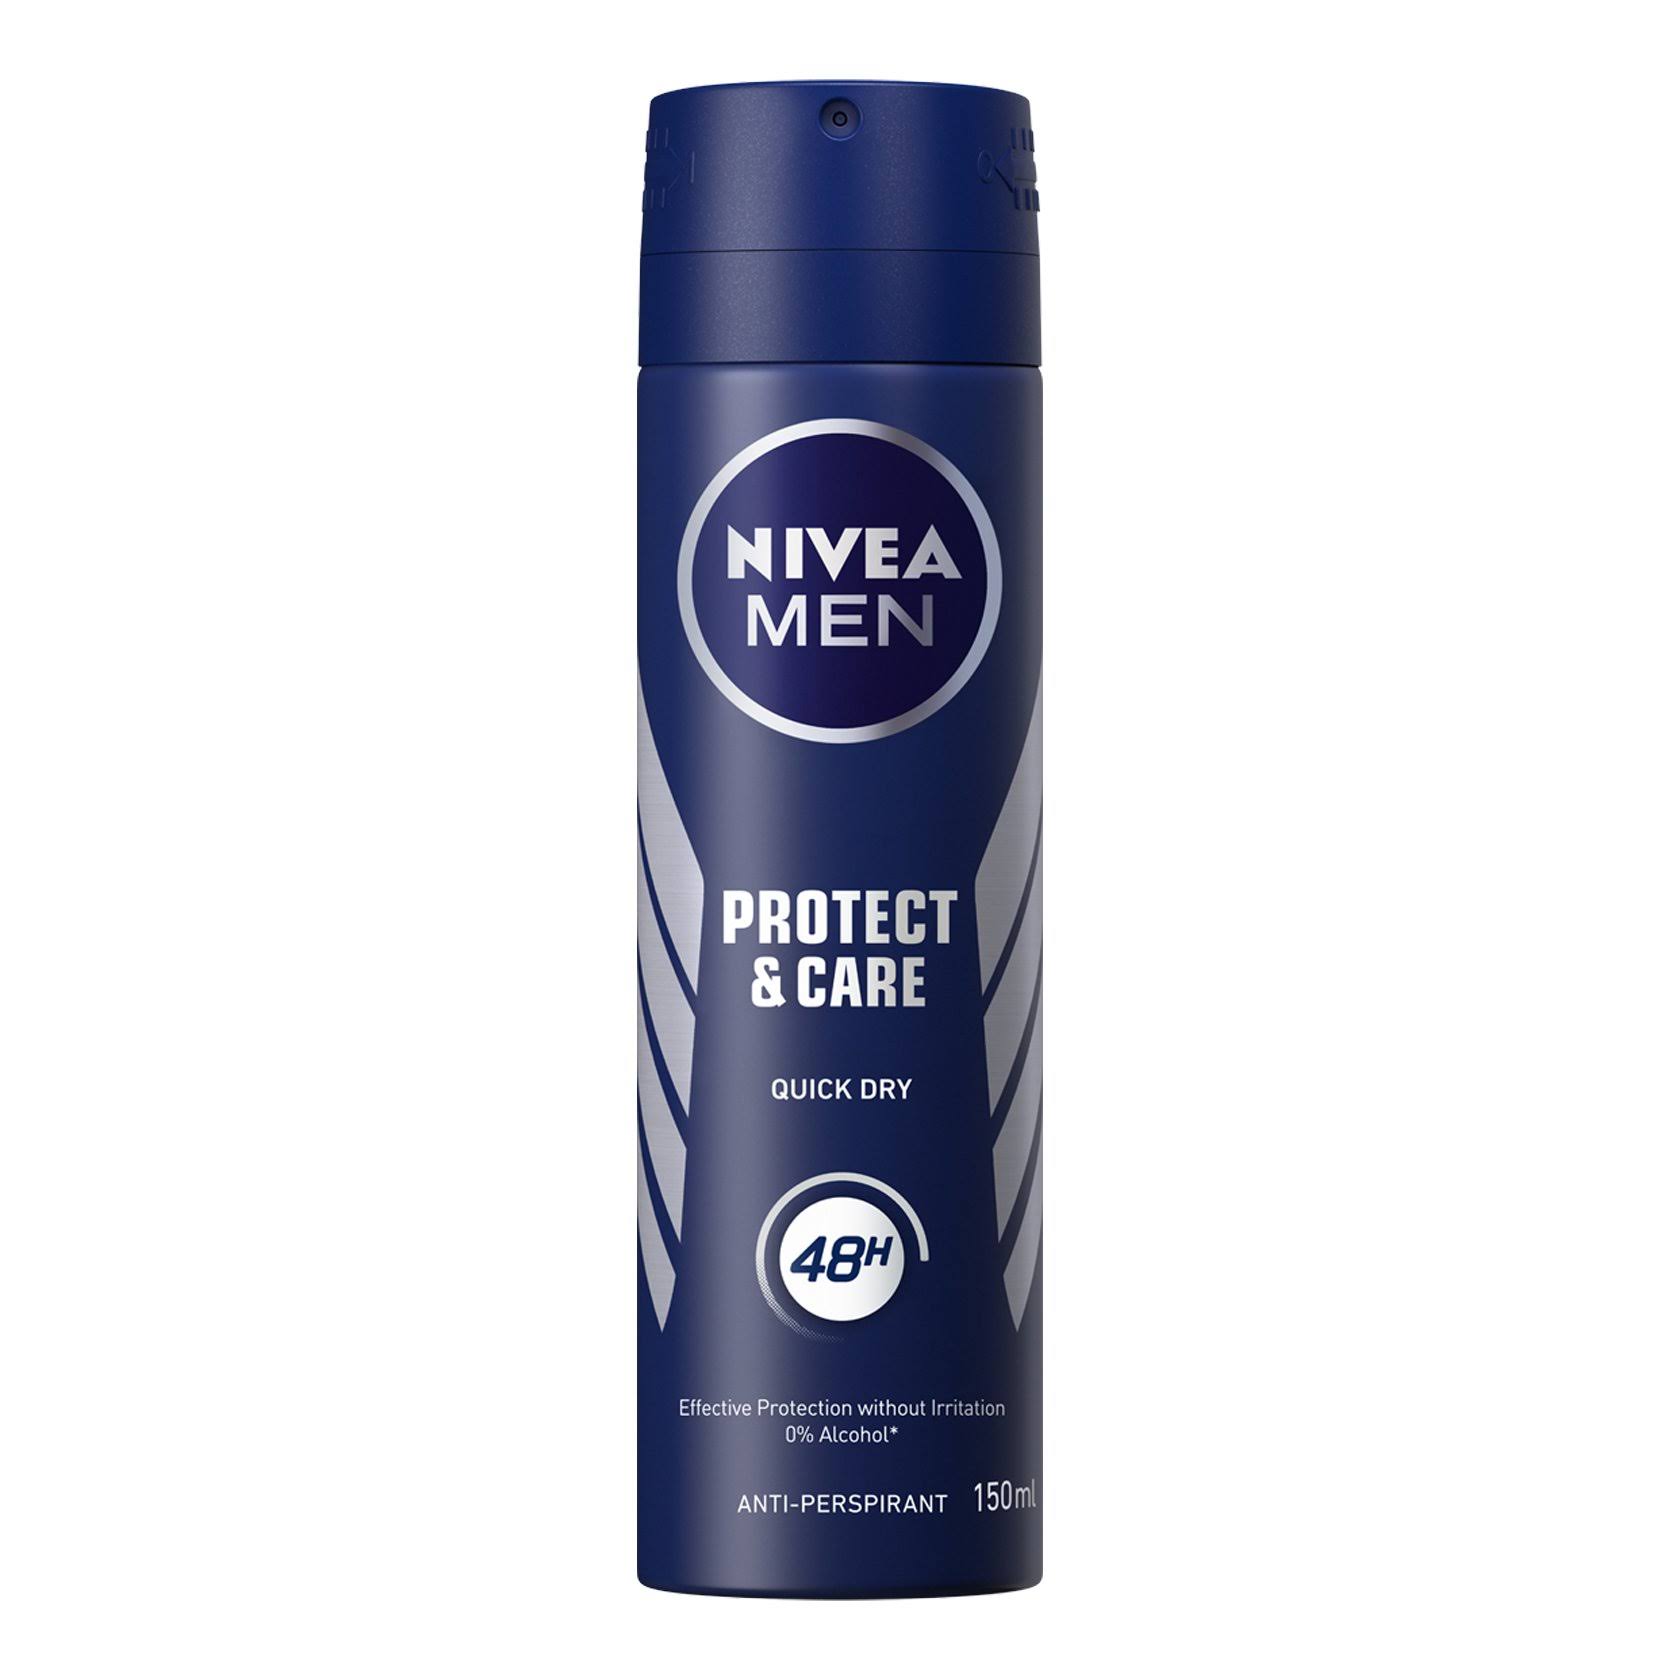 Nivea Men Protect and Care Anti-perspirant Deodorant Spray - 150ml